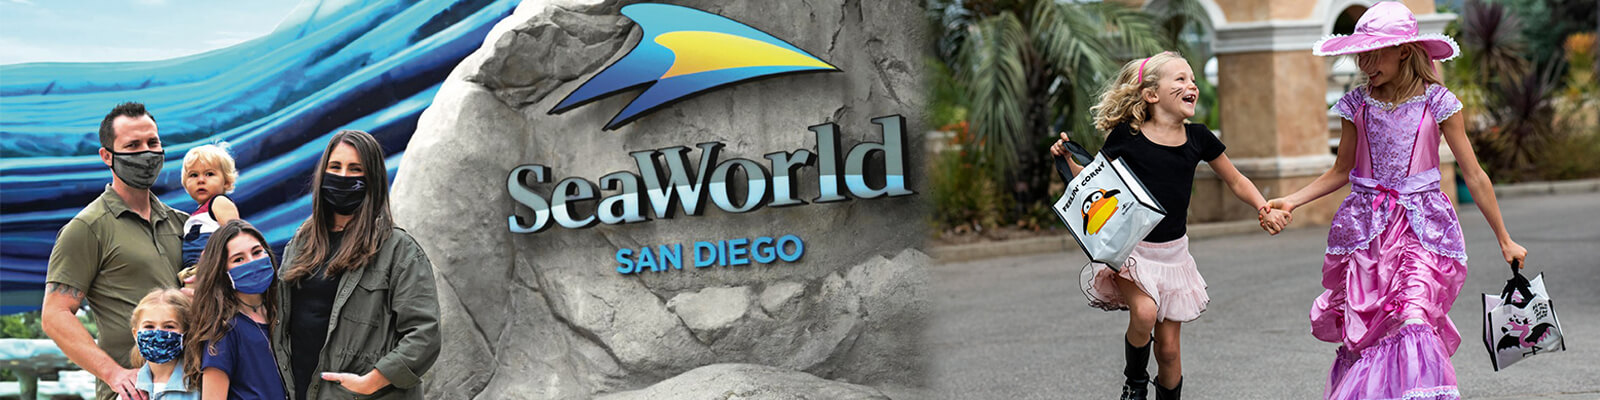 Seaworld San Diego Coupons